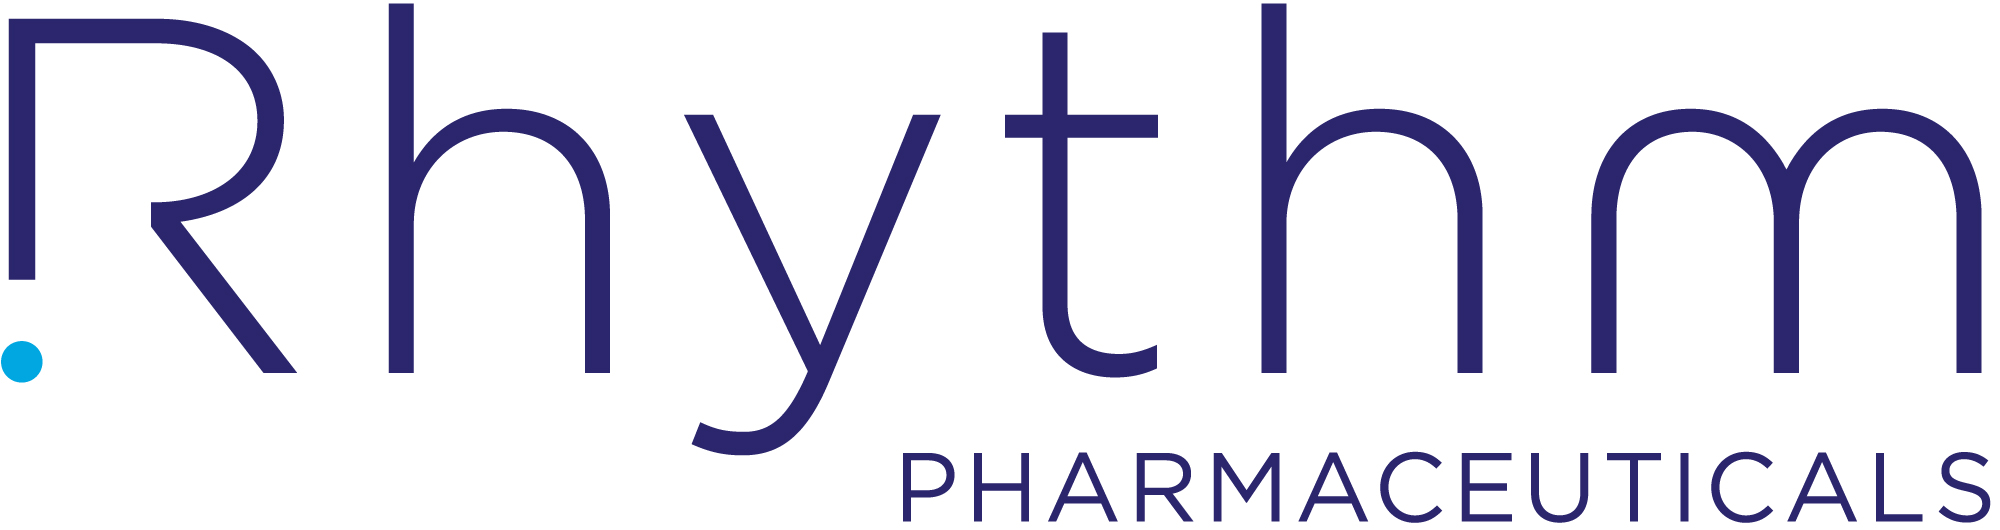 Rhythm Pharmaceuticals, Inc. - MassBio